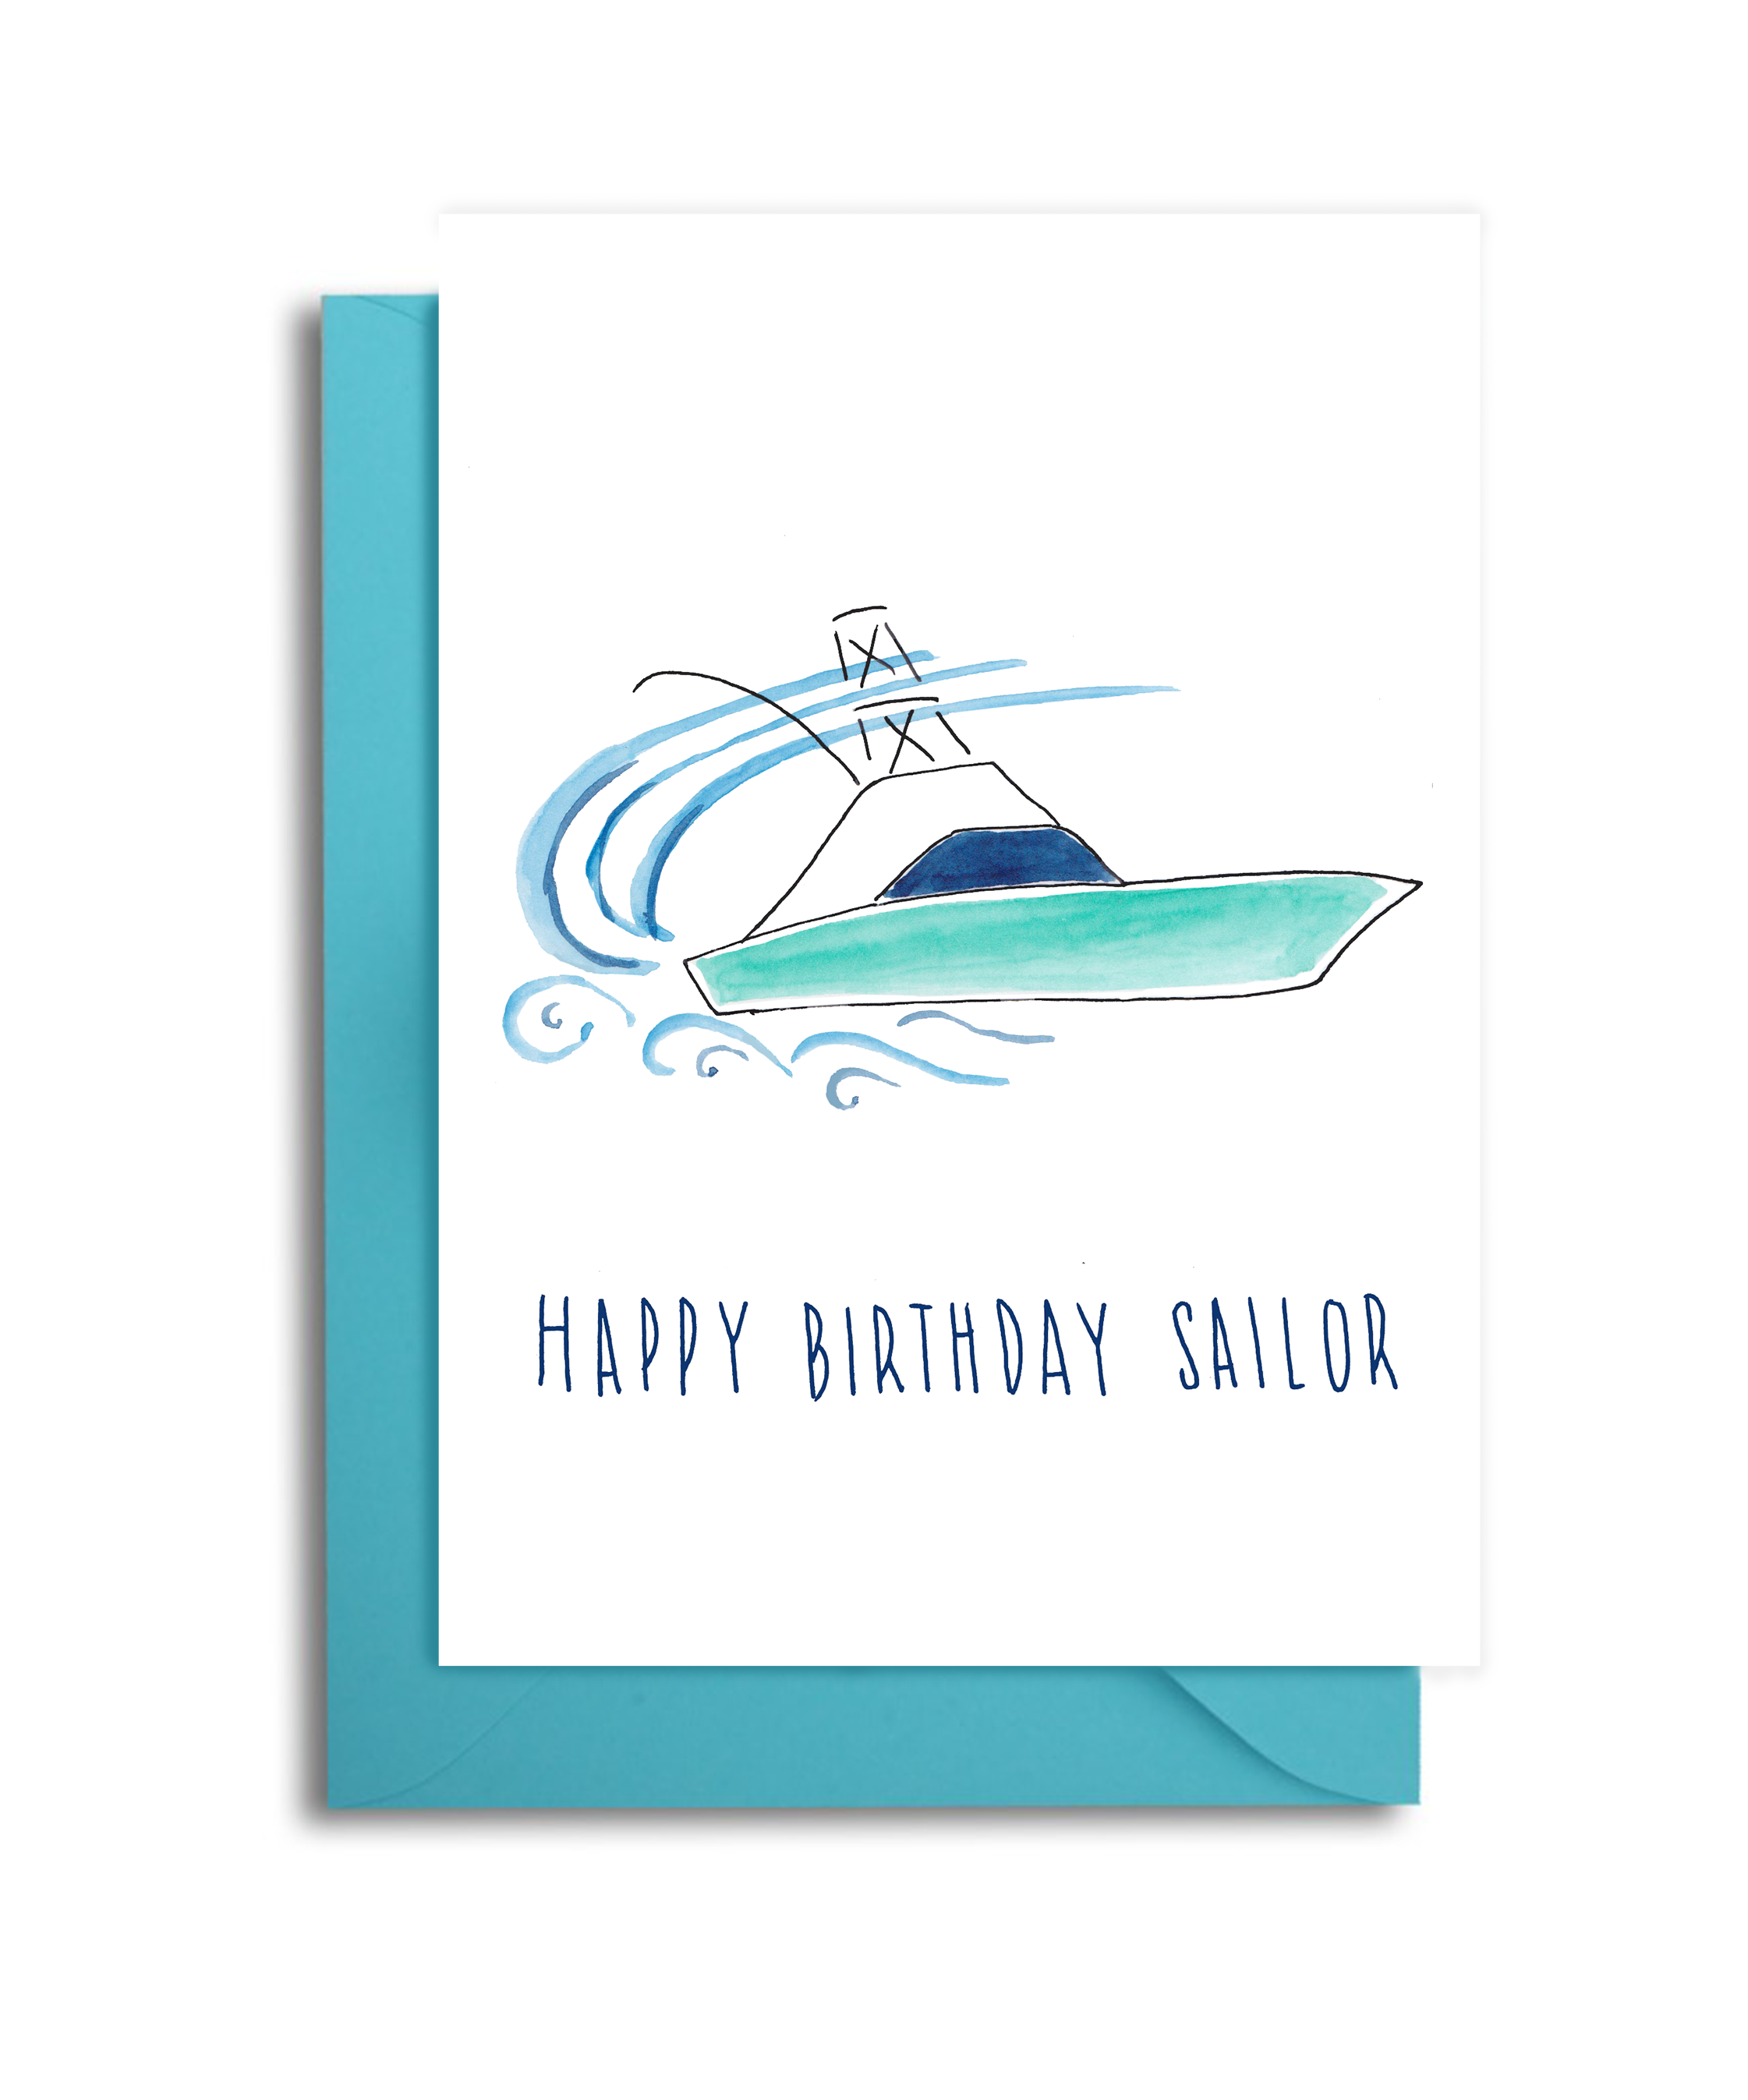 Sport Fisher Boat Birthday Card